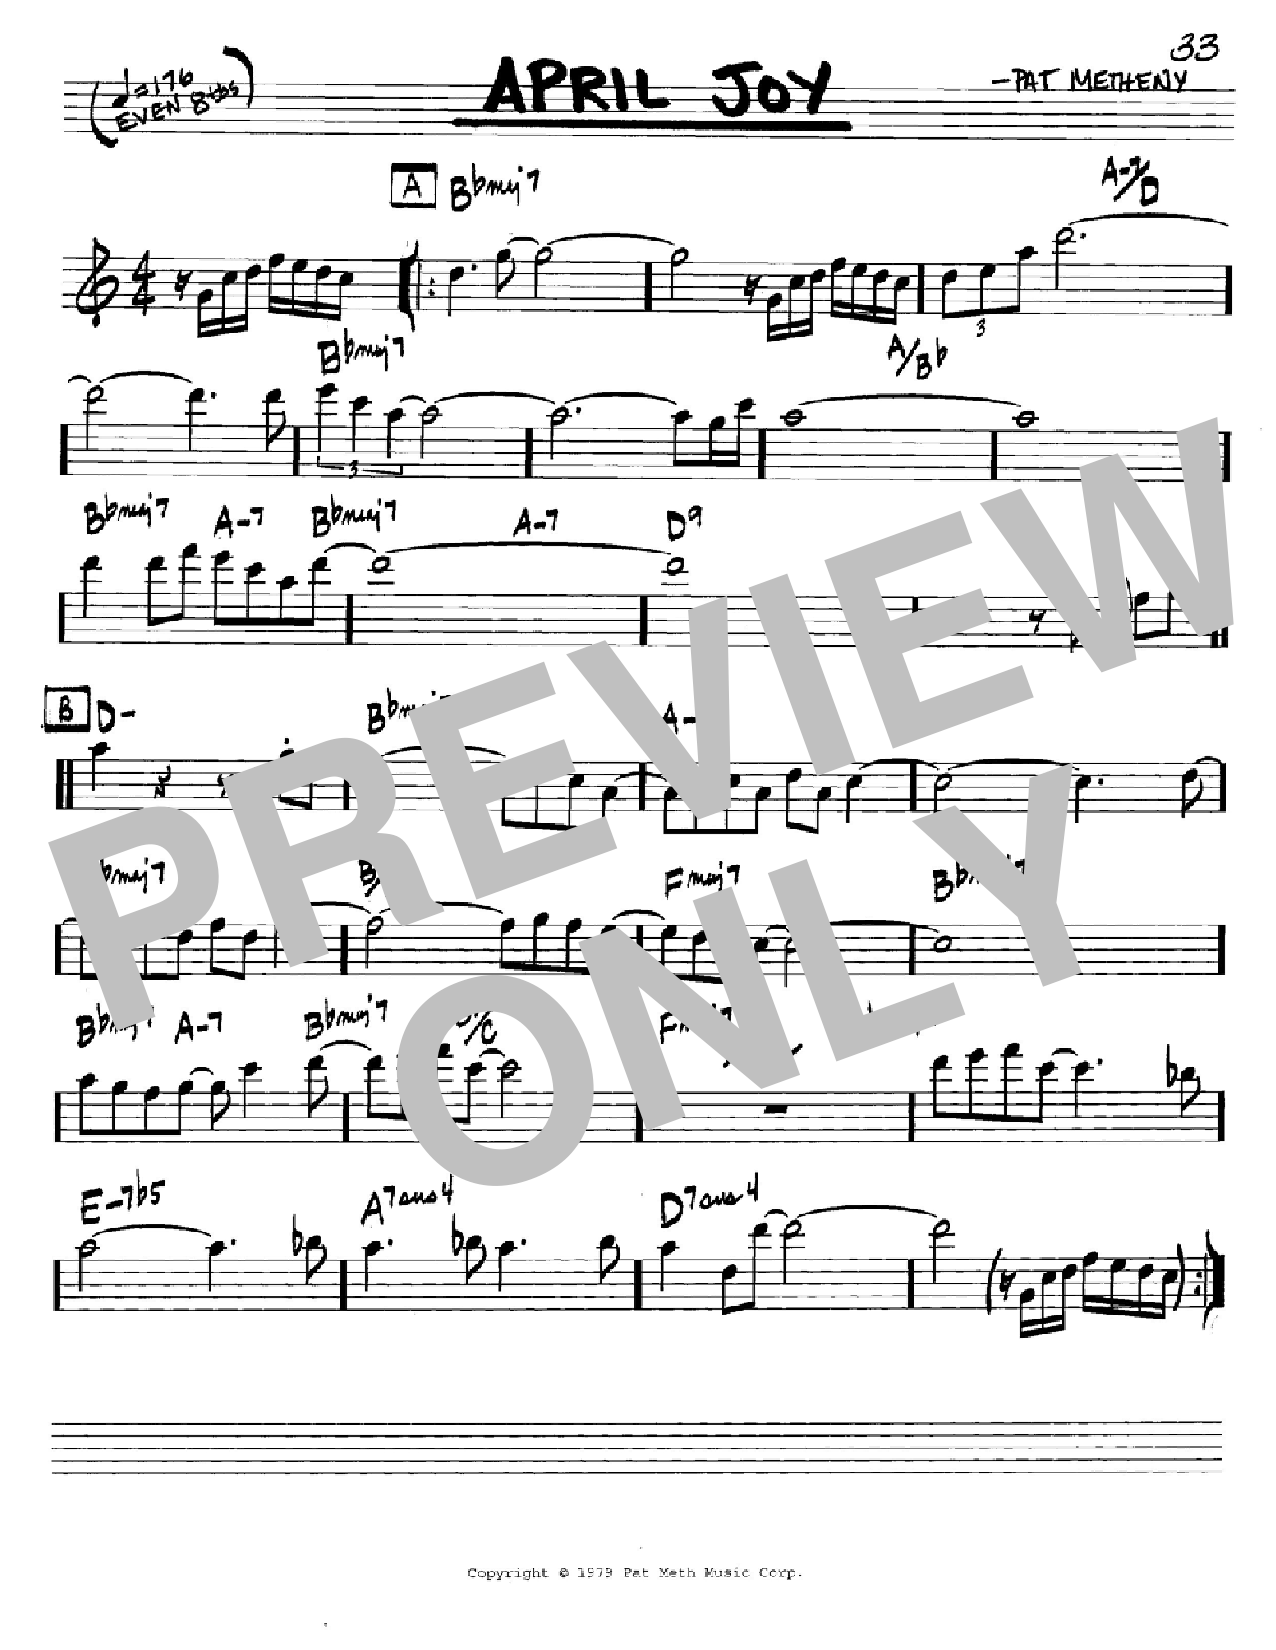 Pat Metheny April Joy Sheet Music Notes & Chords for Real Book – Melody & Chords - Download or Print PDF